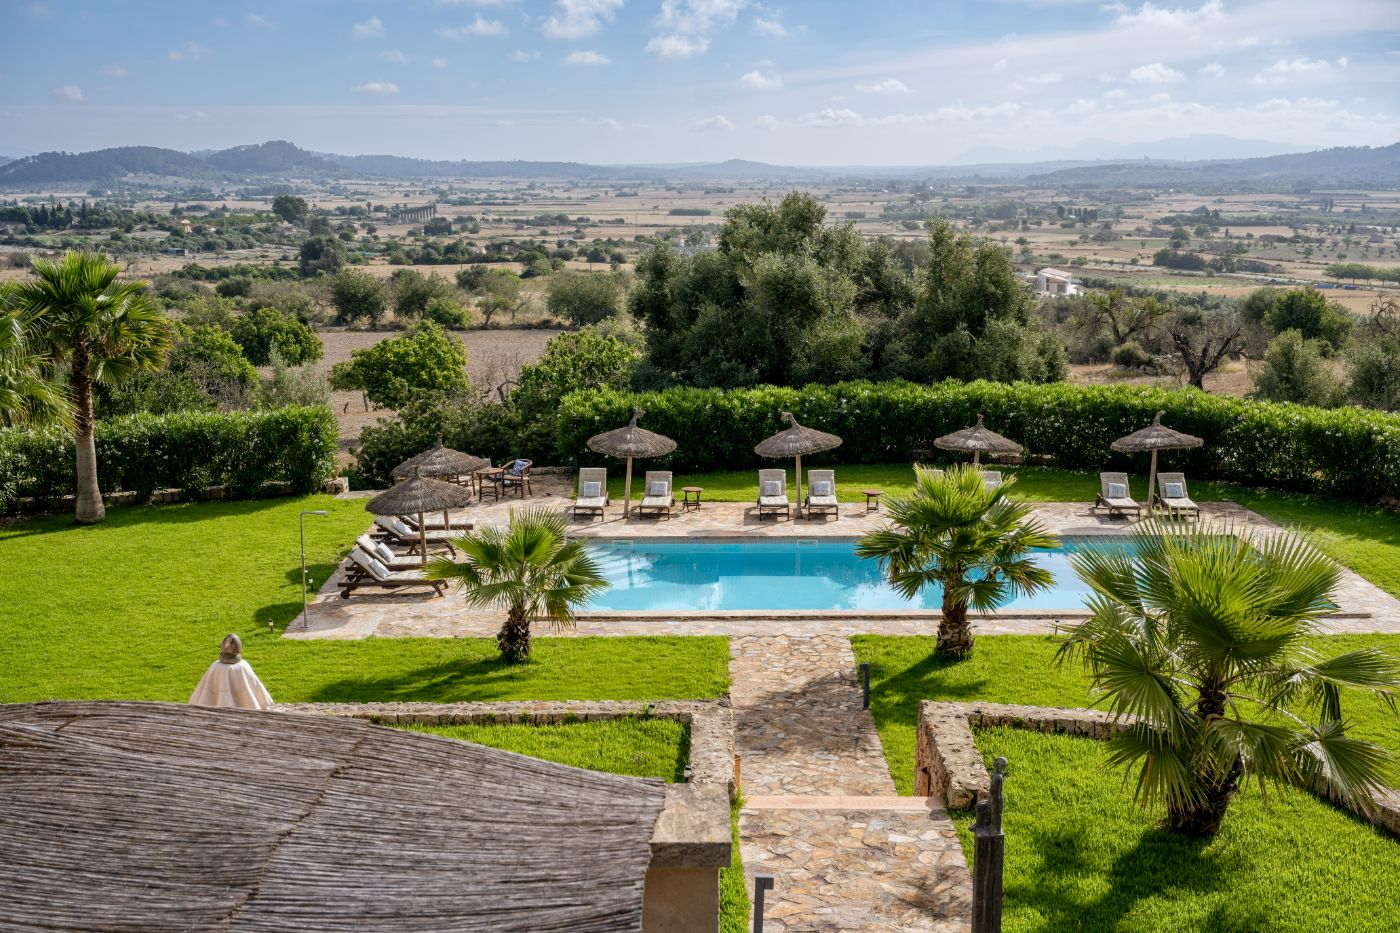 Pool and garden at Villa Sineu Vista